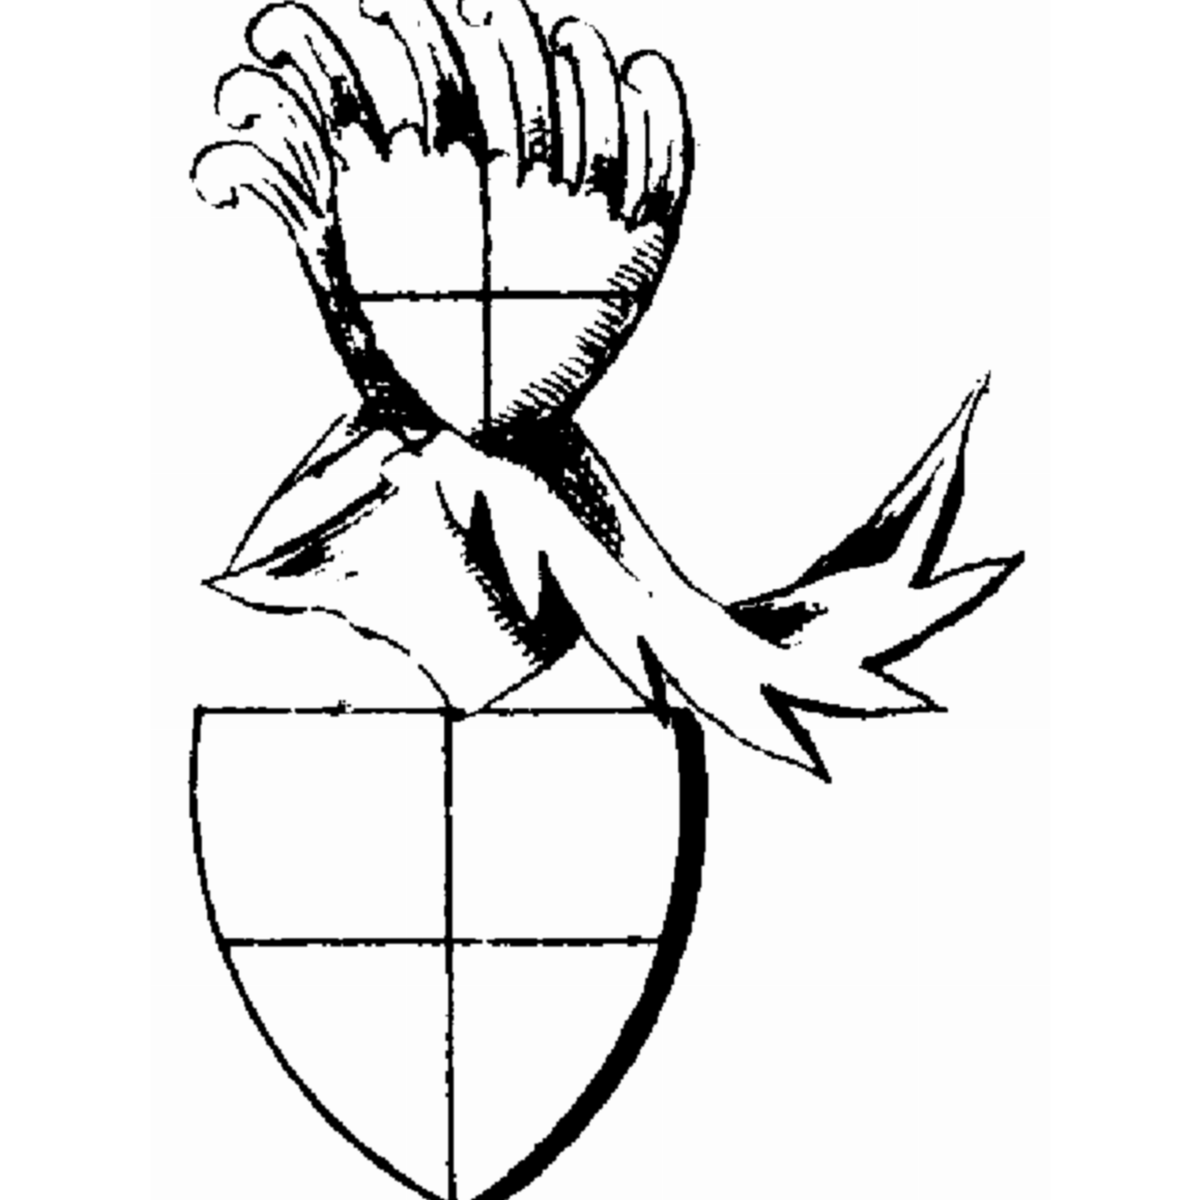 Wappen der Familie Ermann